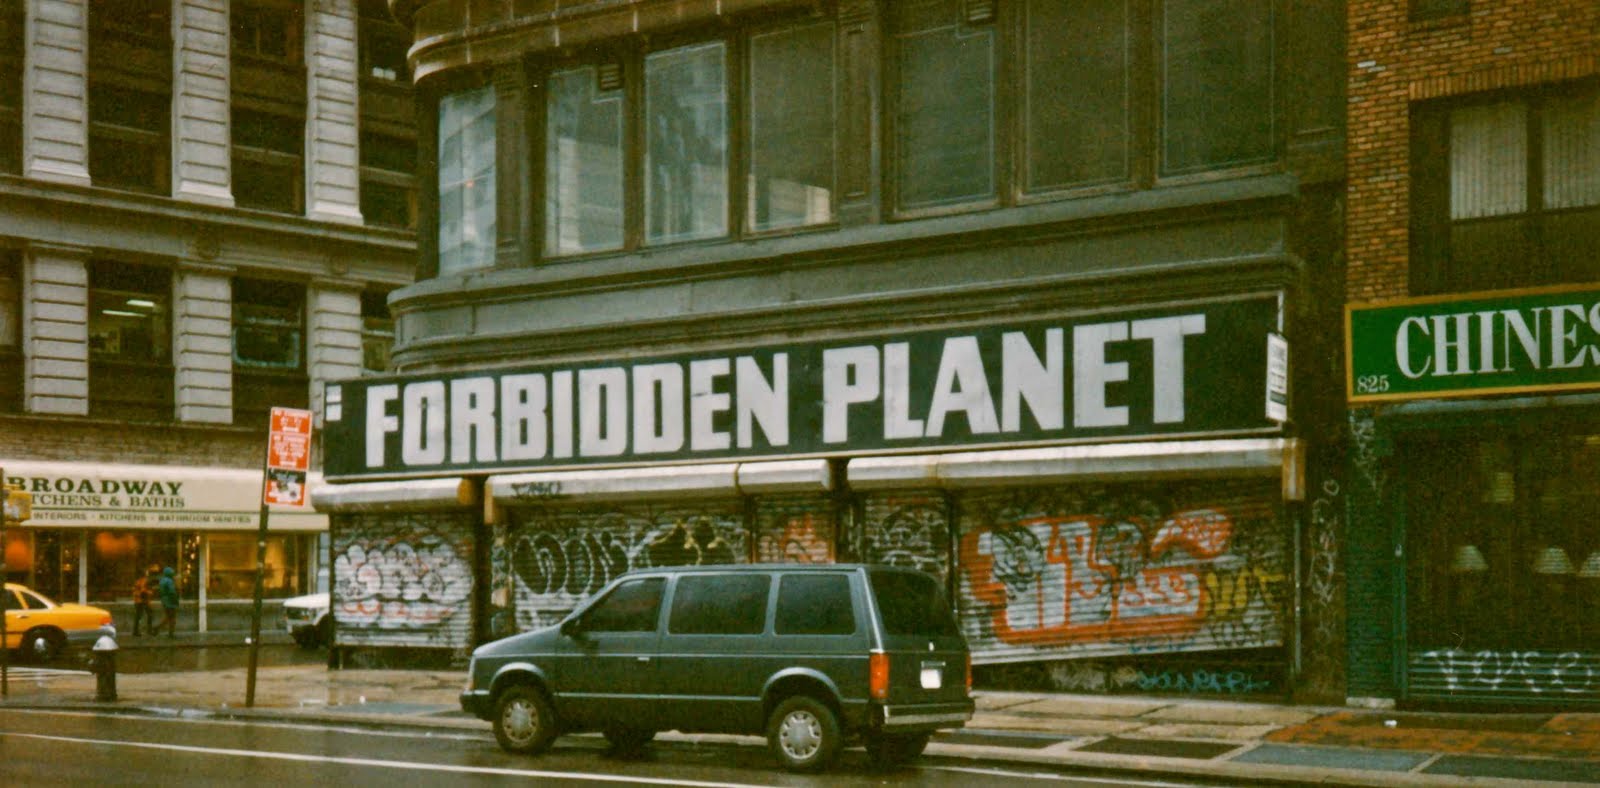 Forbidden Planet Comic Book Store Black T-Shirt XL New York City NYC NY